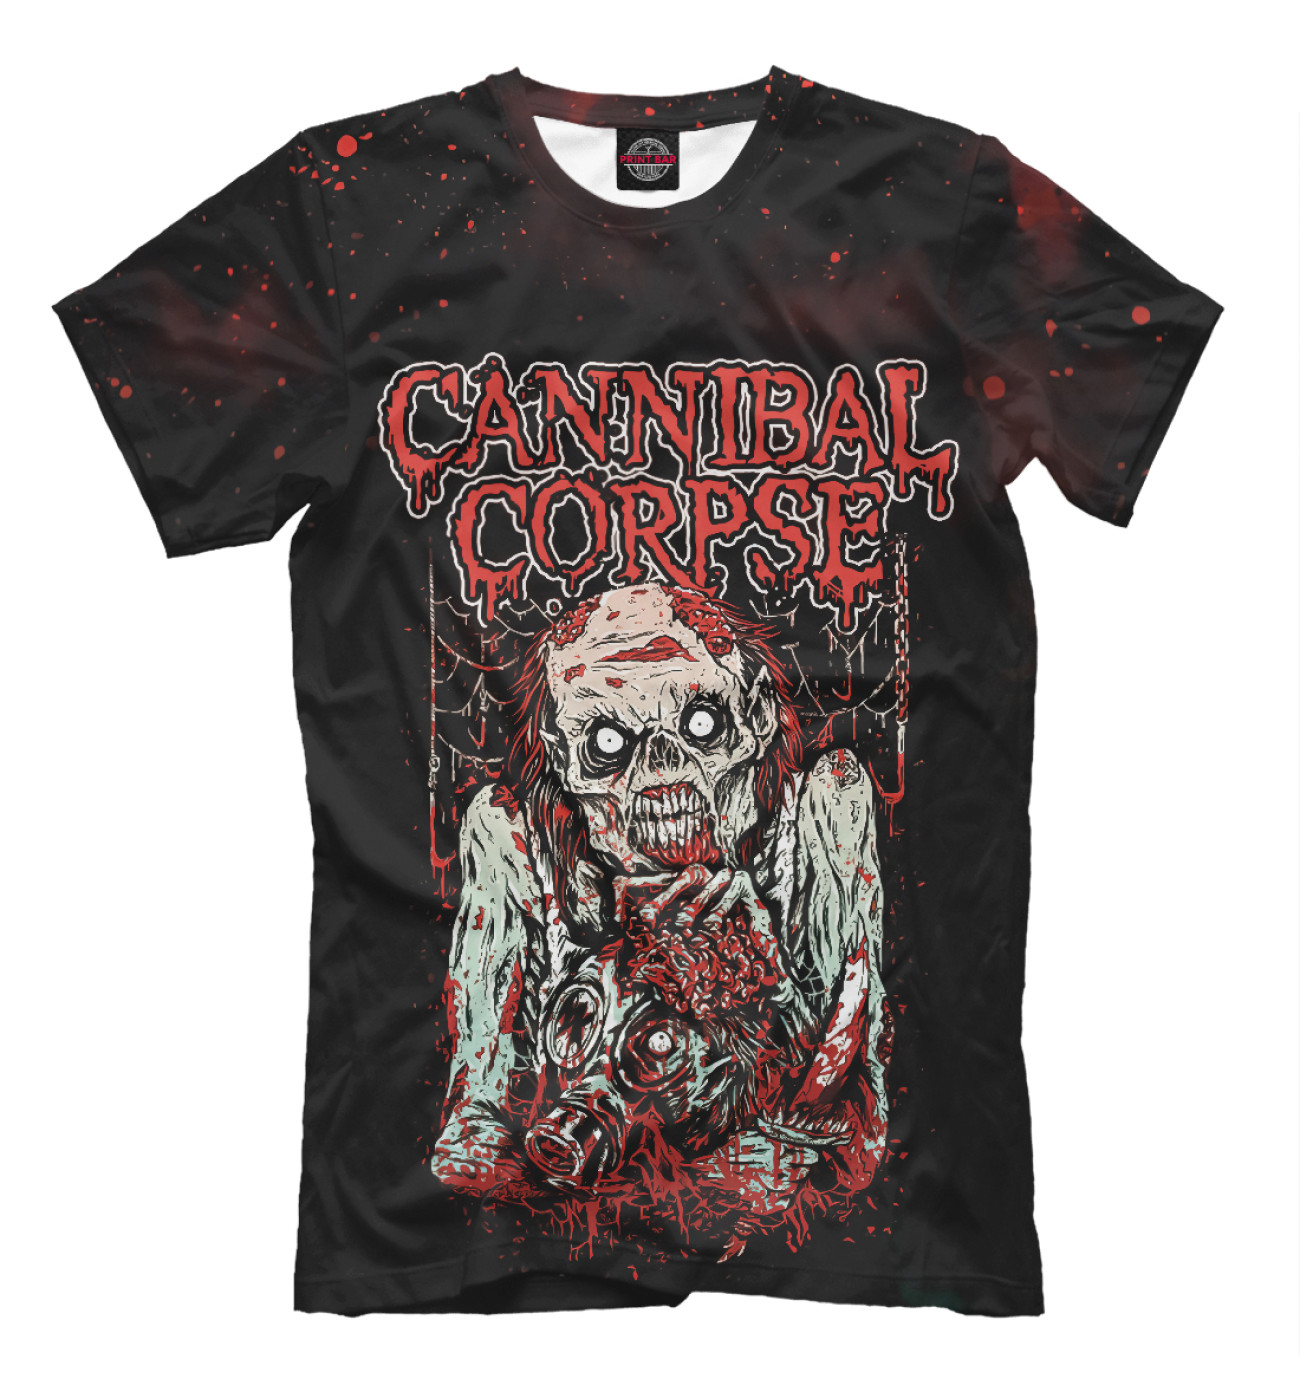 Мужская Футболка Cannibal Corpse, артикул: CCR-639722-fut-2